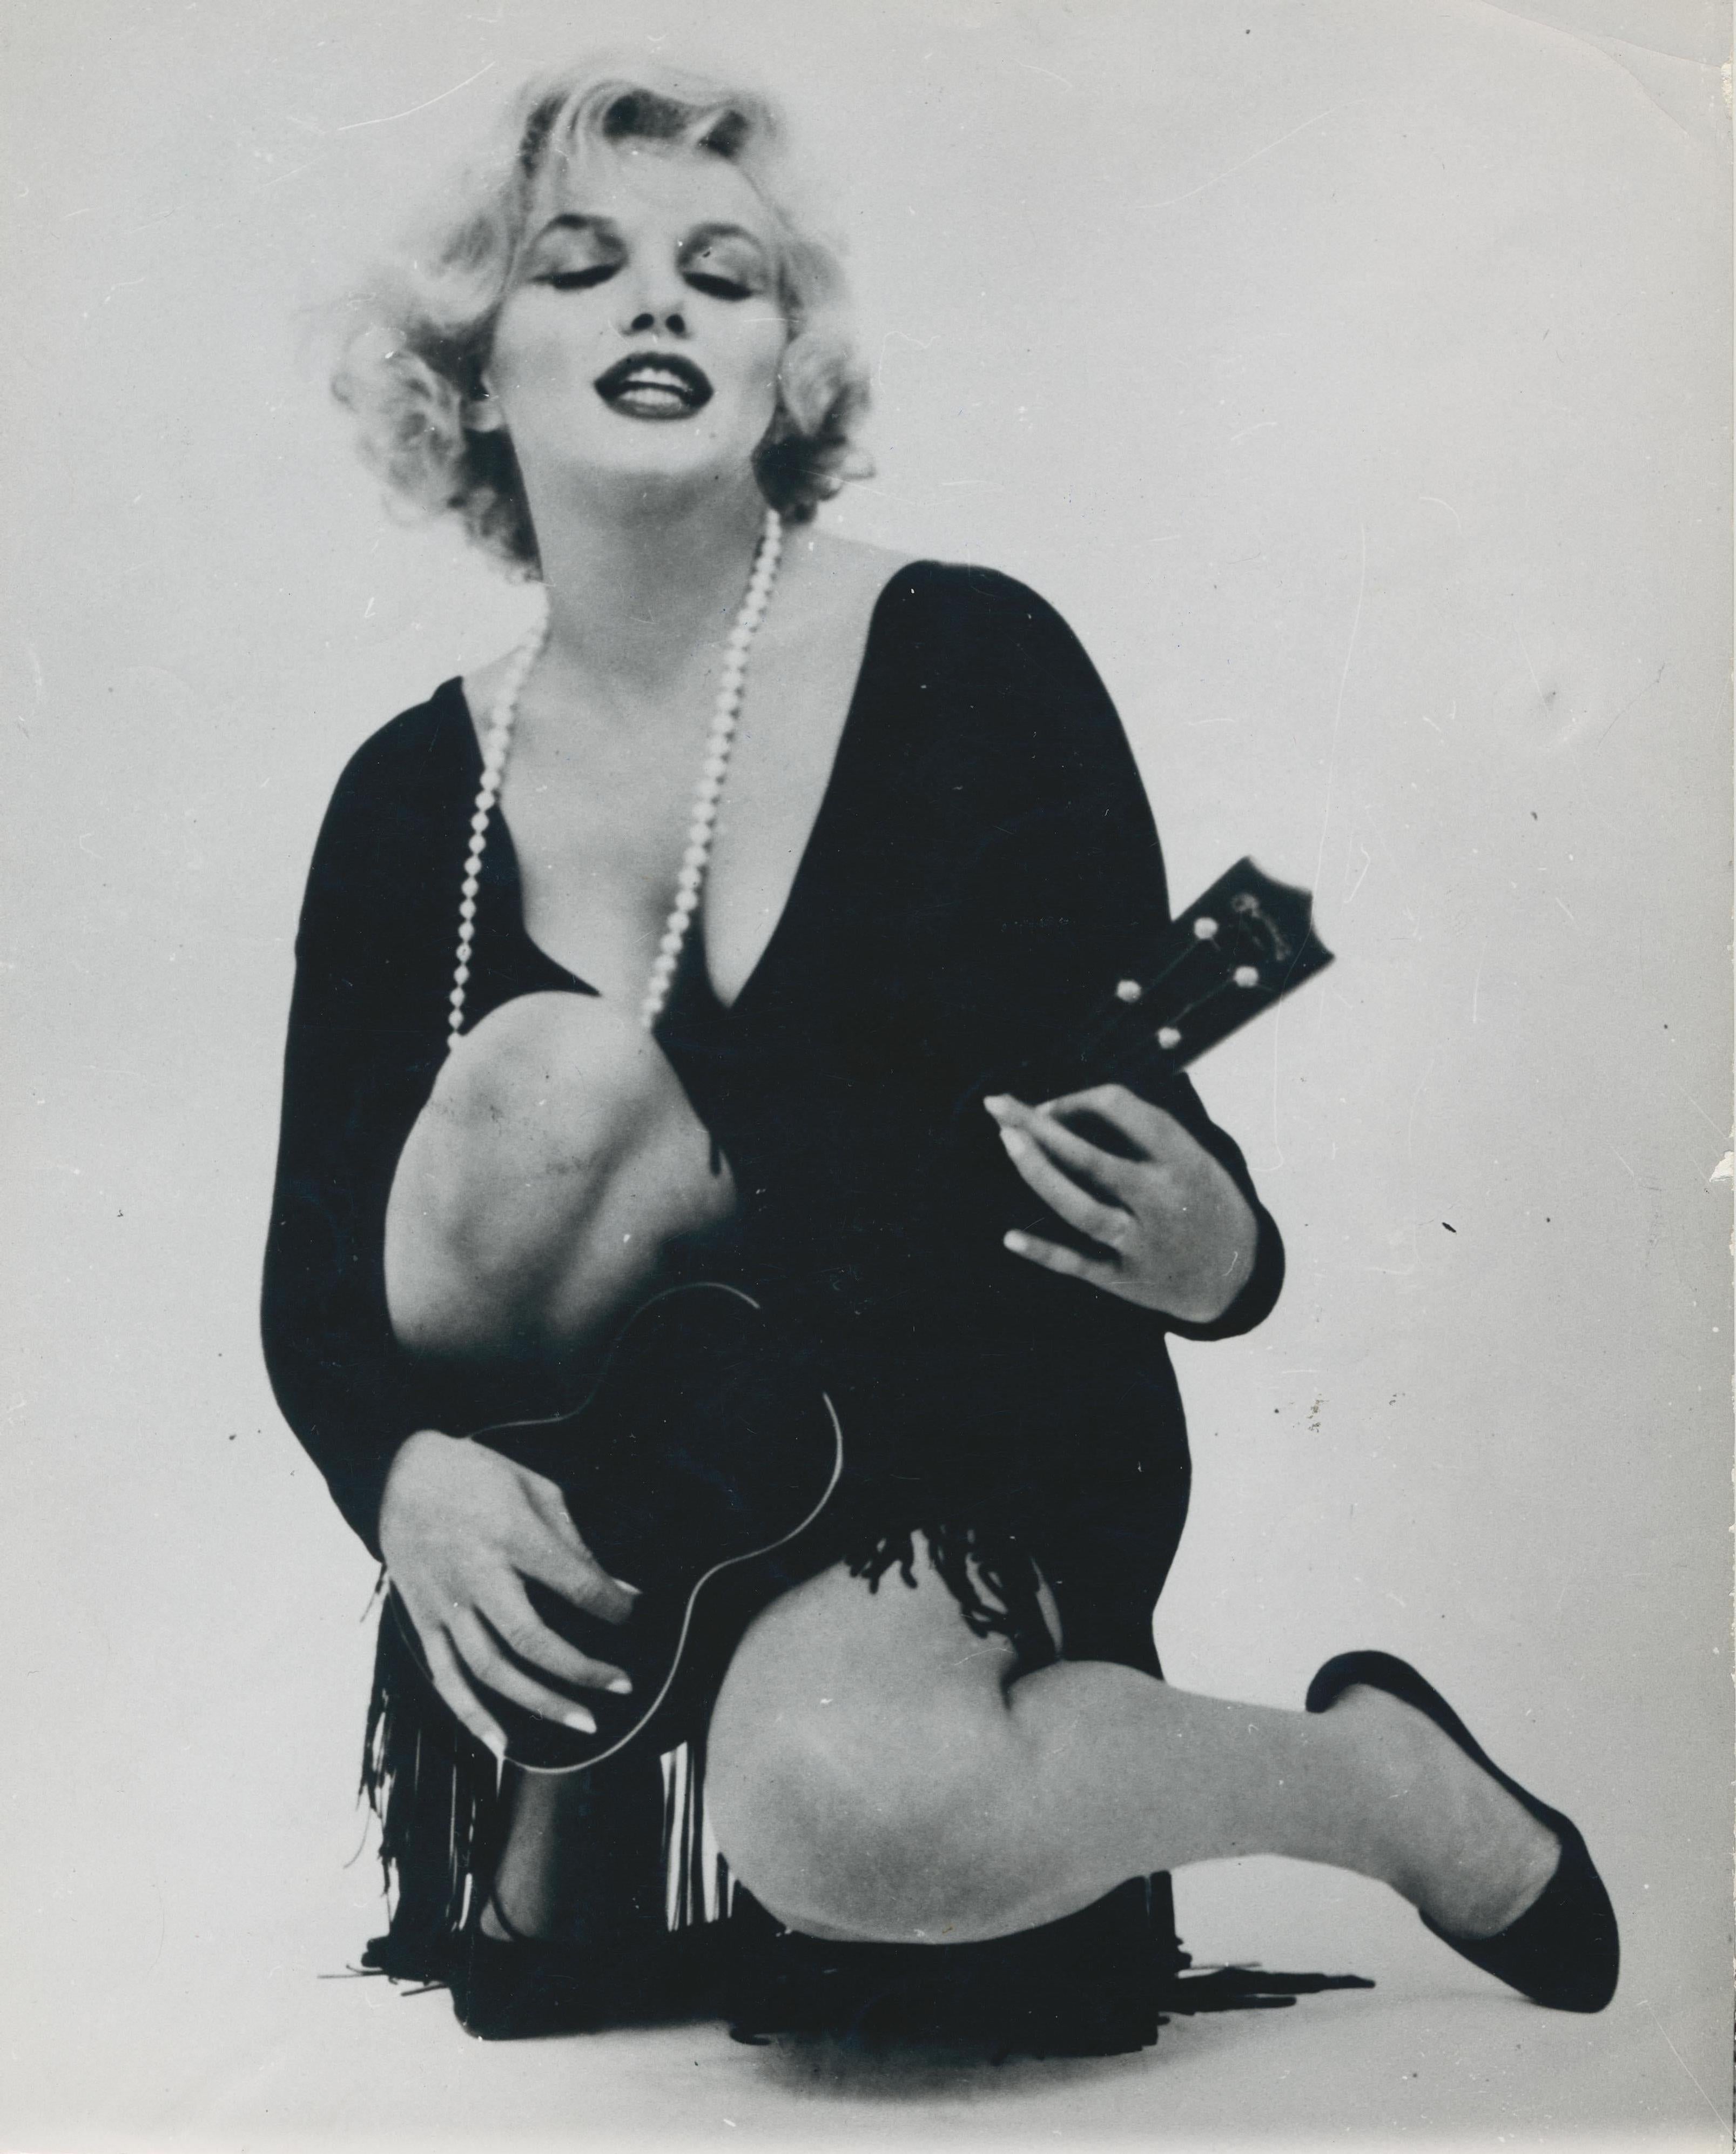 Richard Avedon Black and White Photograph - Marilyn Monroe for "Some Like It Hot, shooting", USA, 1958